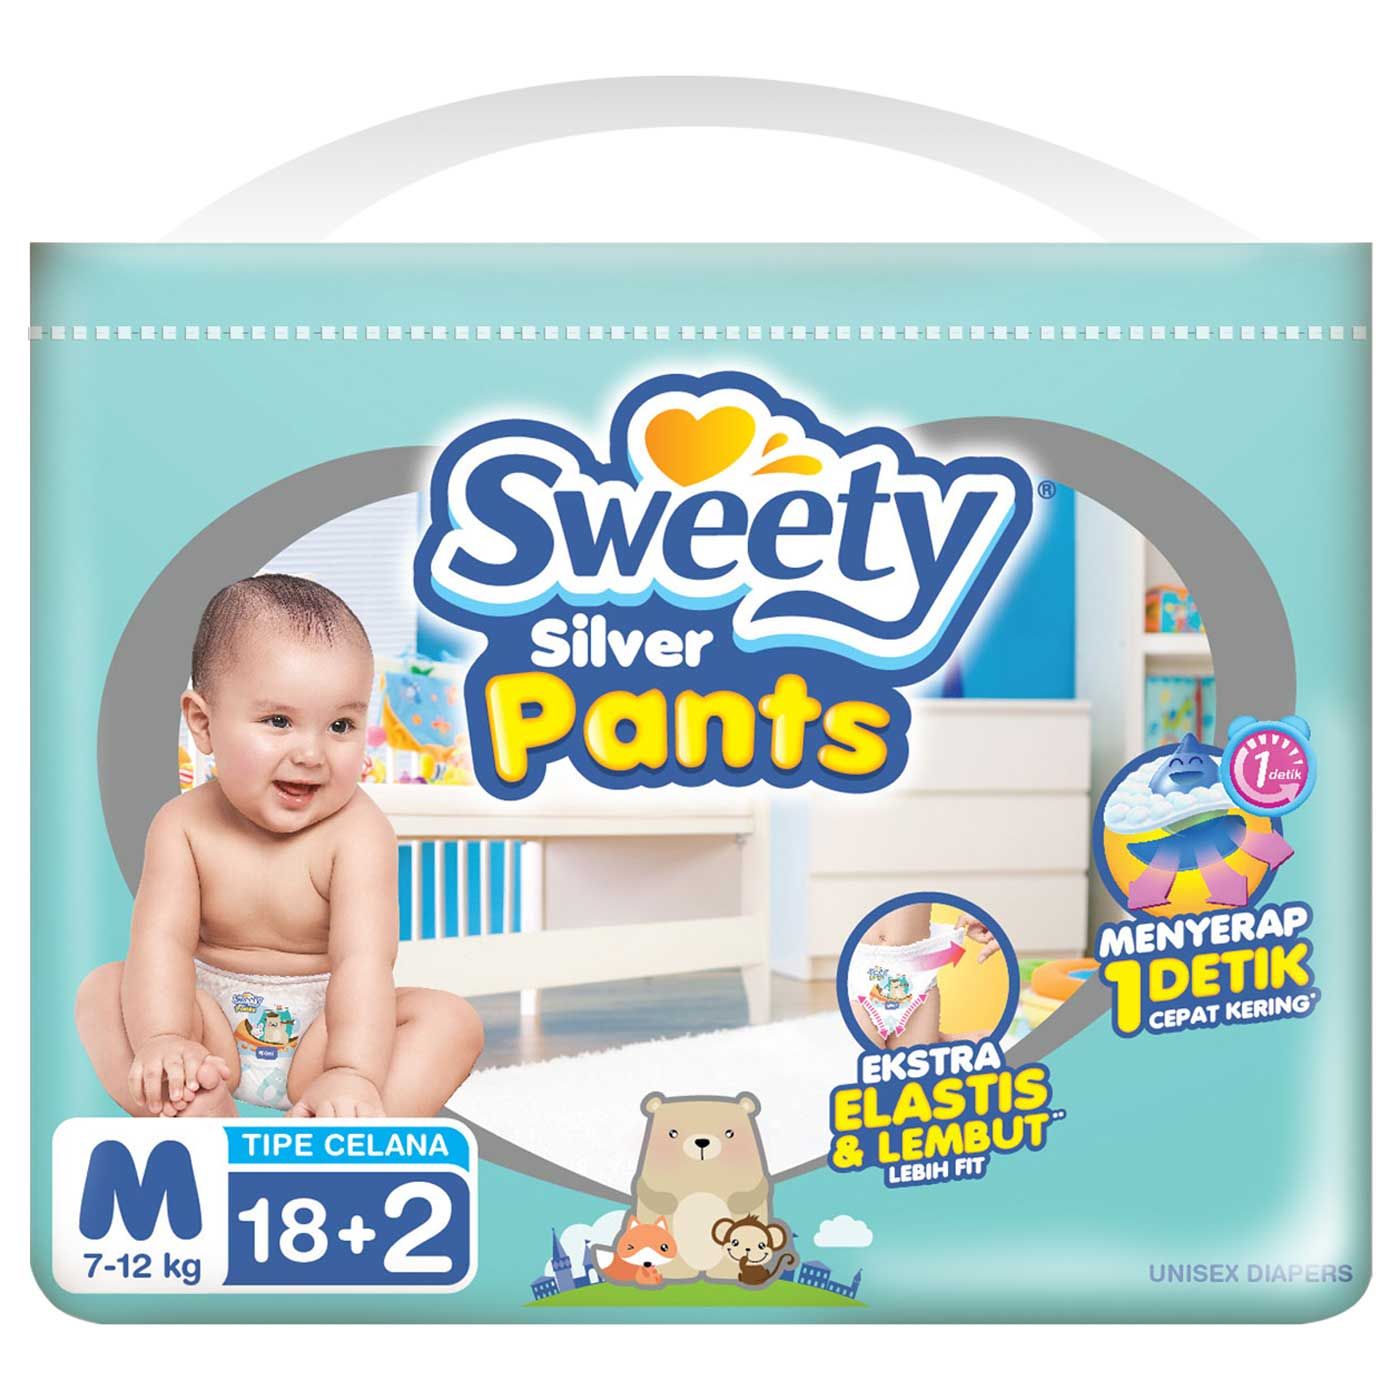 Sweety Silver Pants M 18+2's - 1